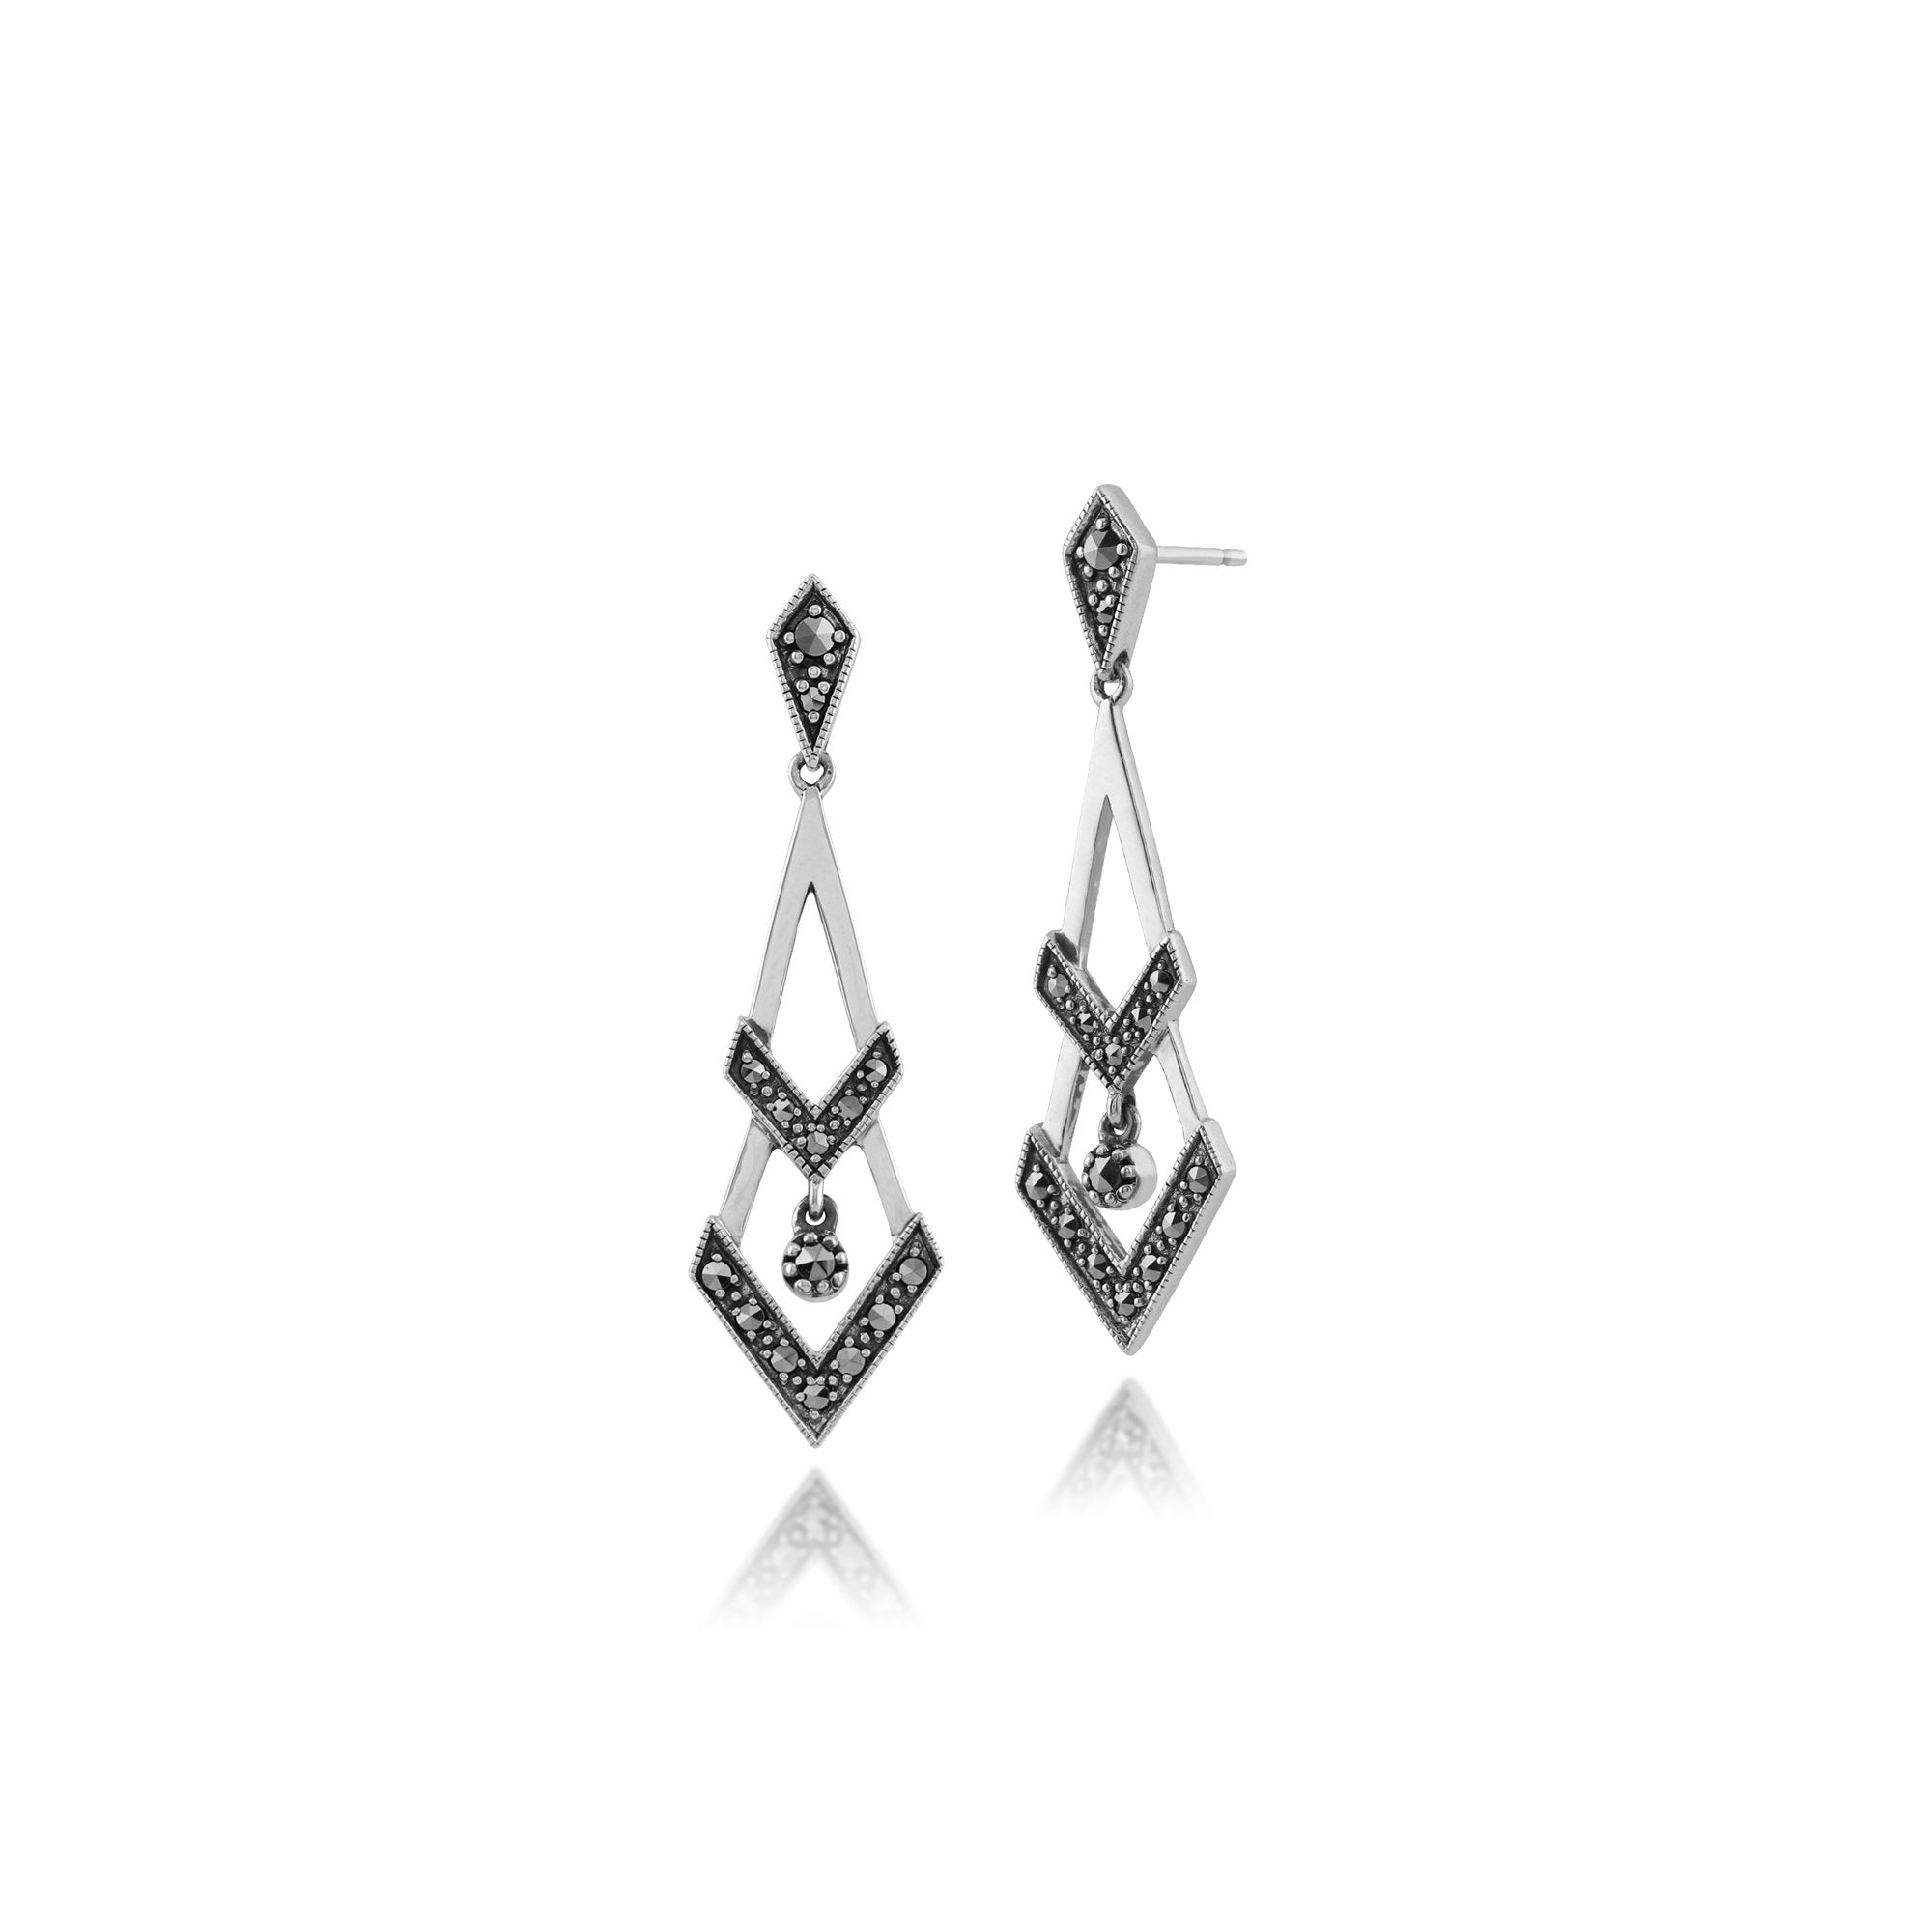 Art Deco Style Round Marcasite Open Work Triangular Drop Earrings in 925 Sterling Silver